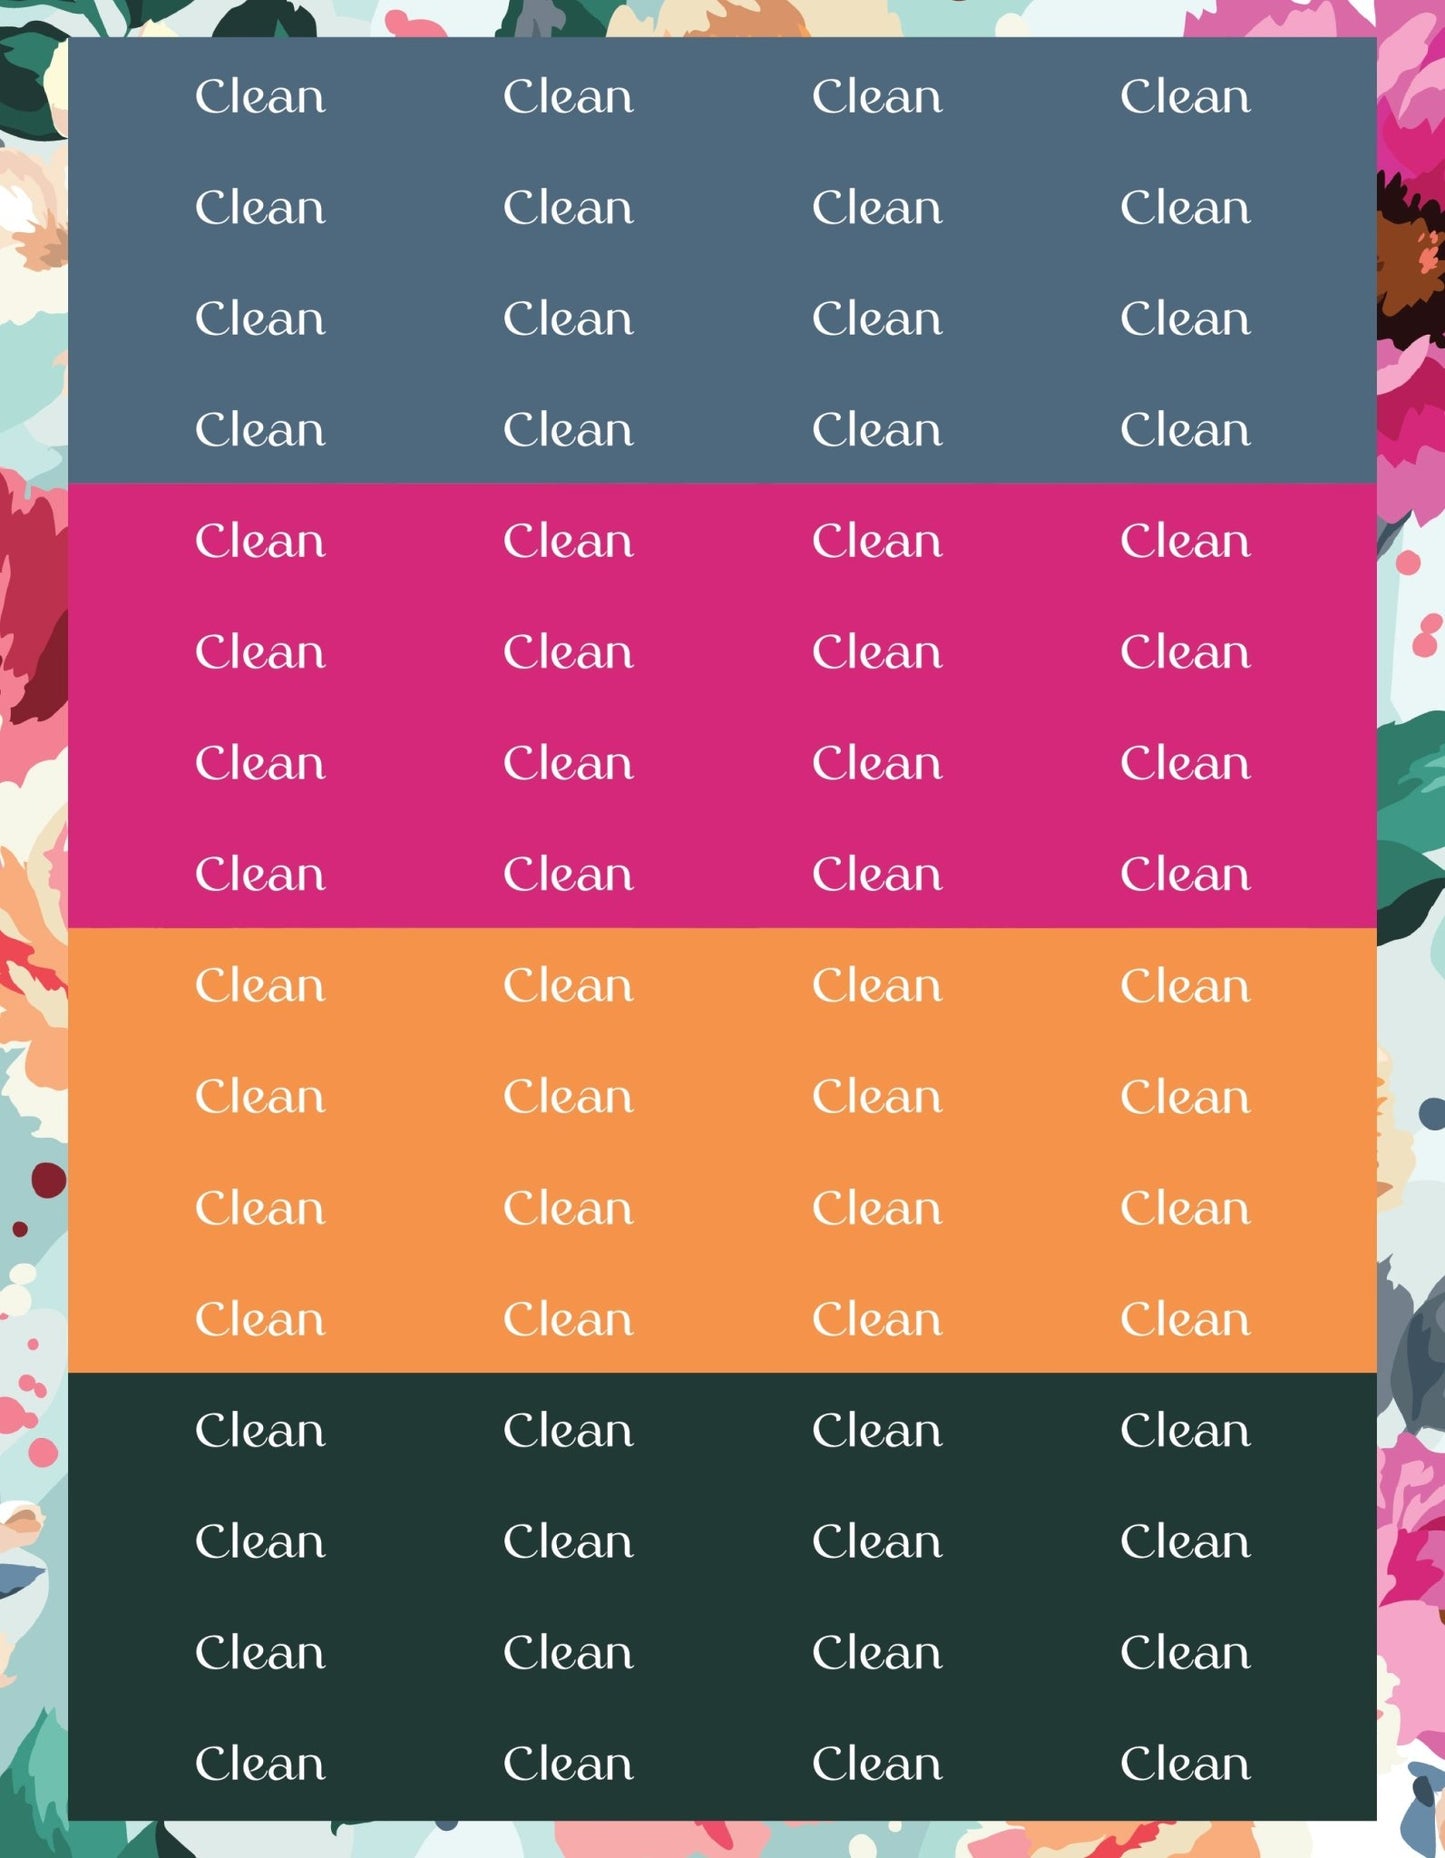 Clean Sticker Sheets - 9 Designs/Colors - Colibri Paper Co